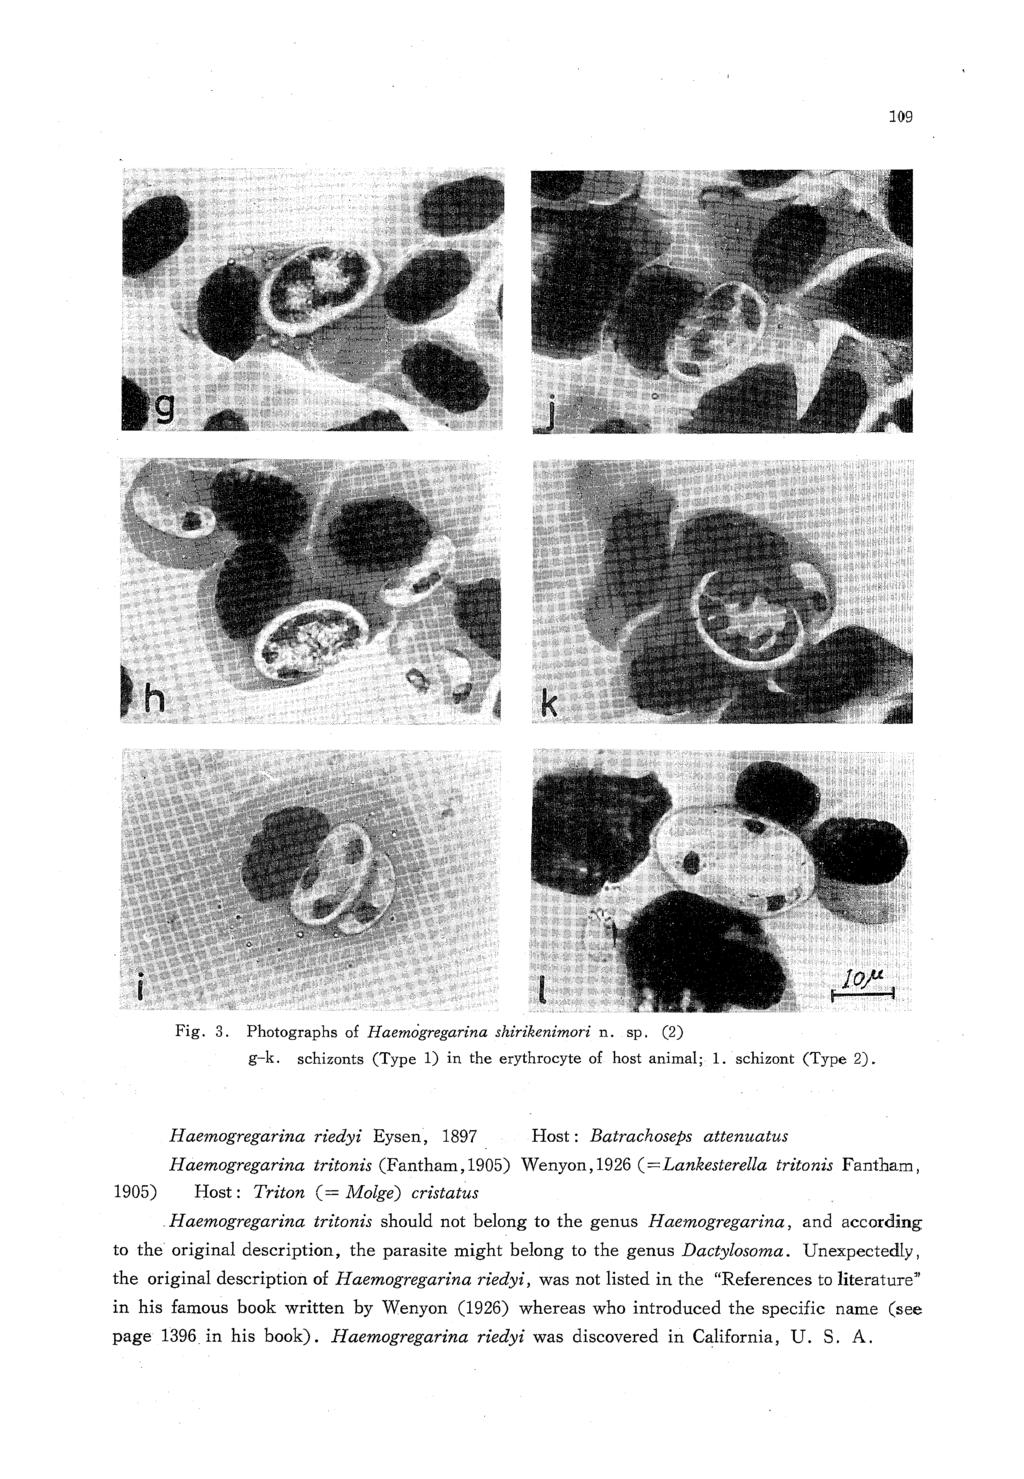 109 W J^BB^^R^ Fig. 3. Photographs of Haemogregarina shirikenimori n. sp. (2) g-k. schizonts (Type 1) in the erythrocyte of host animal; 1. schizont (Type 2).